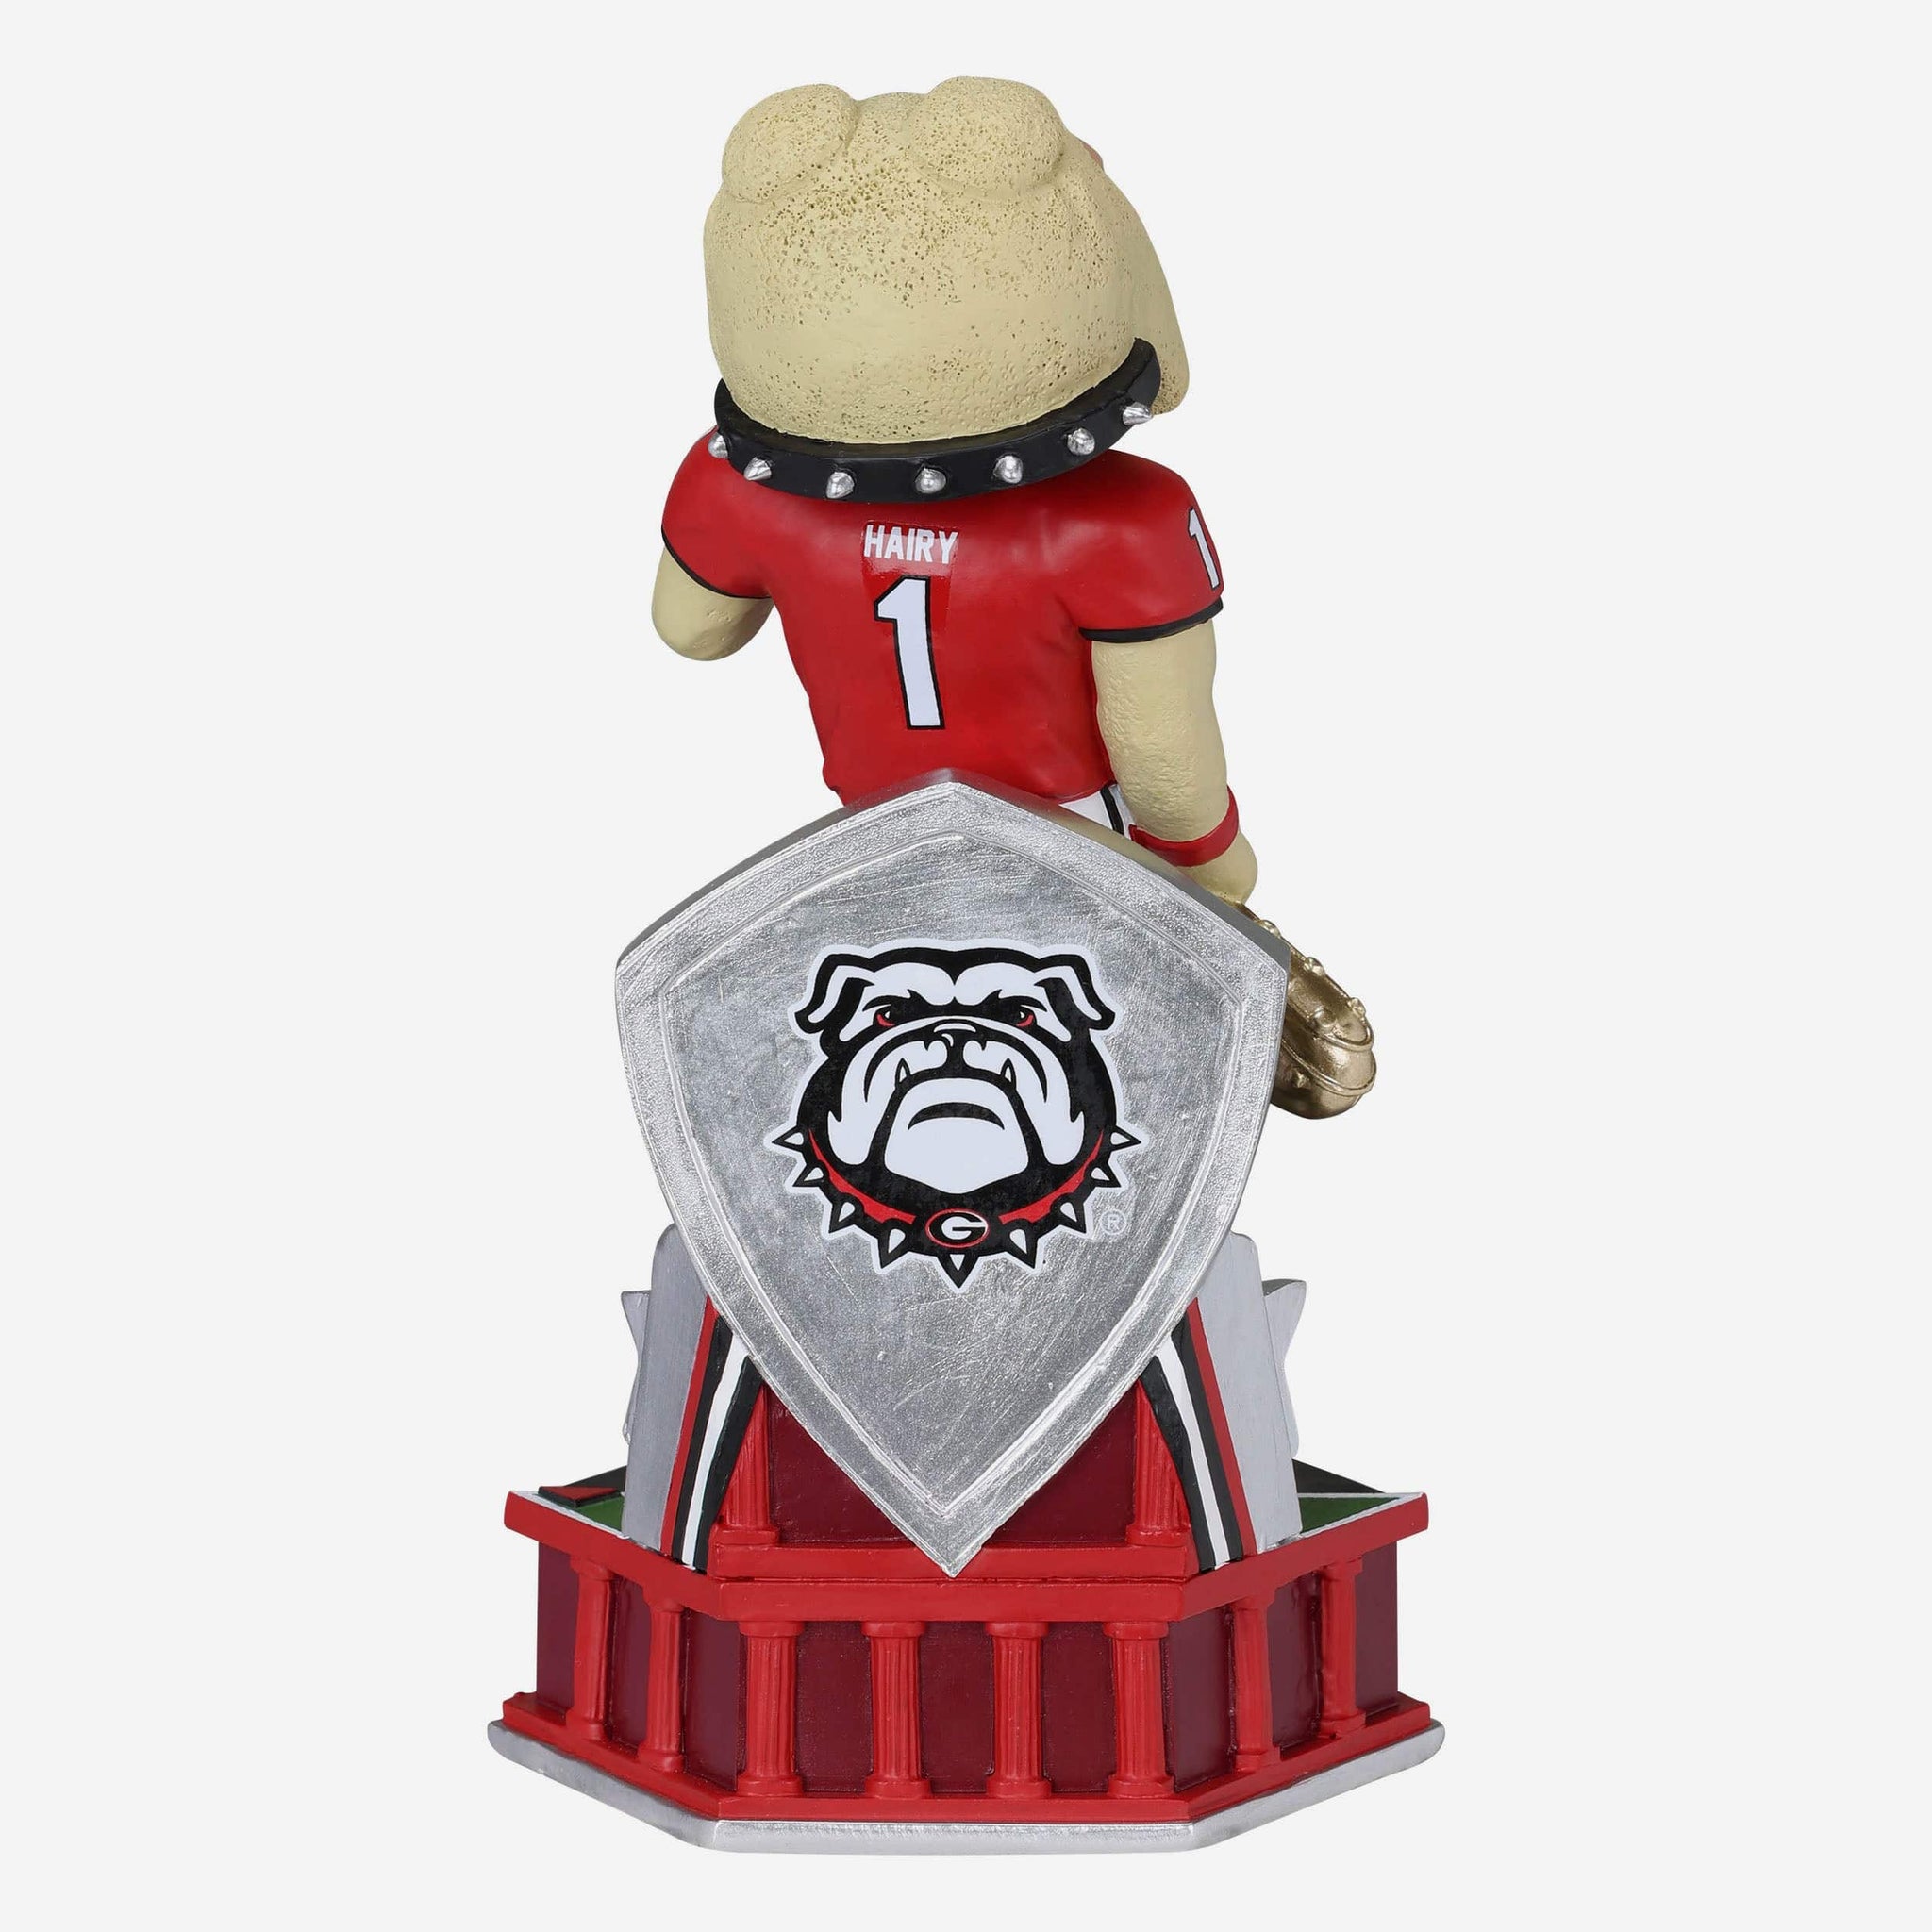 Georgia Bulldogs fans need these dual-celebration bobbleheads